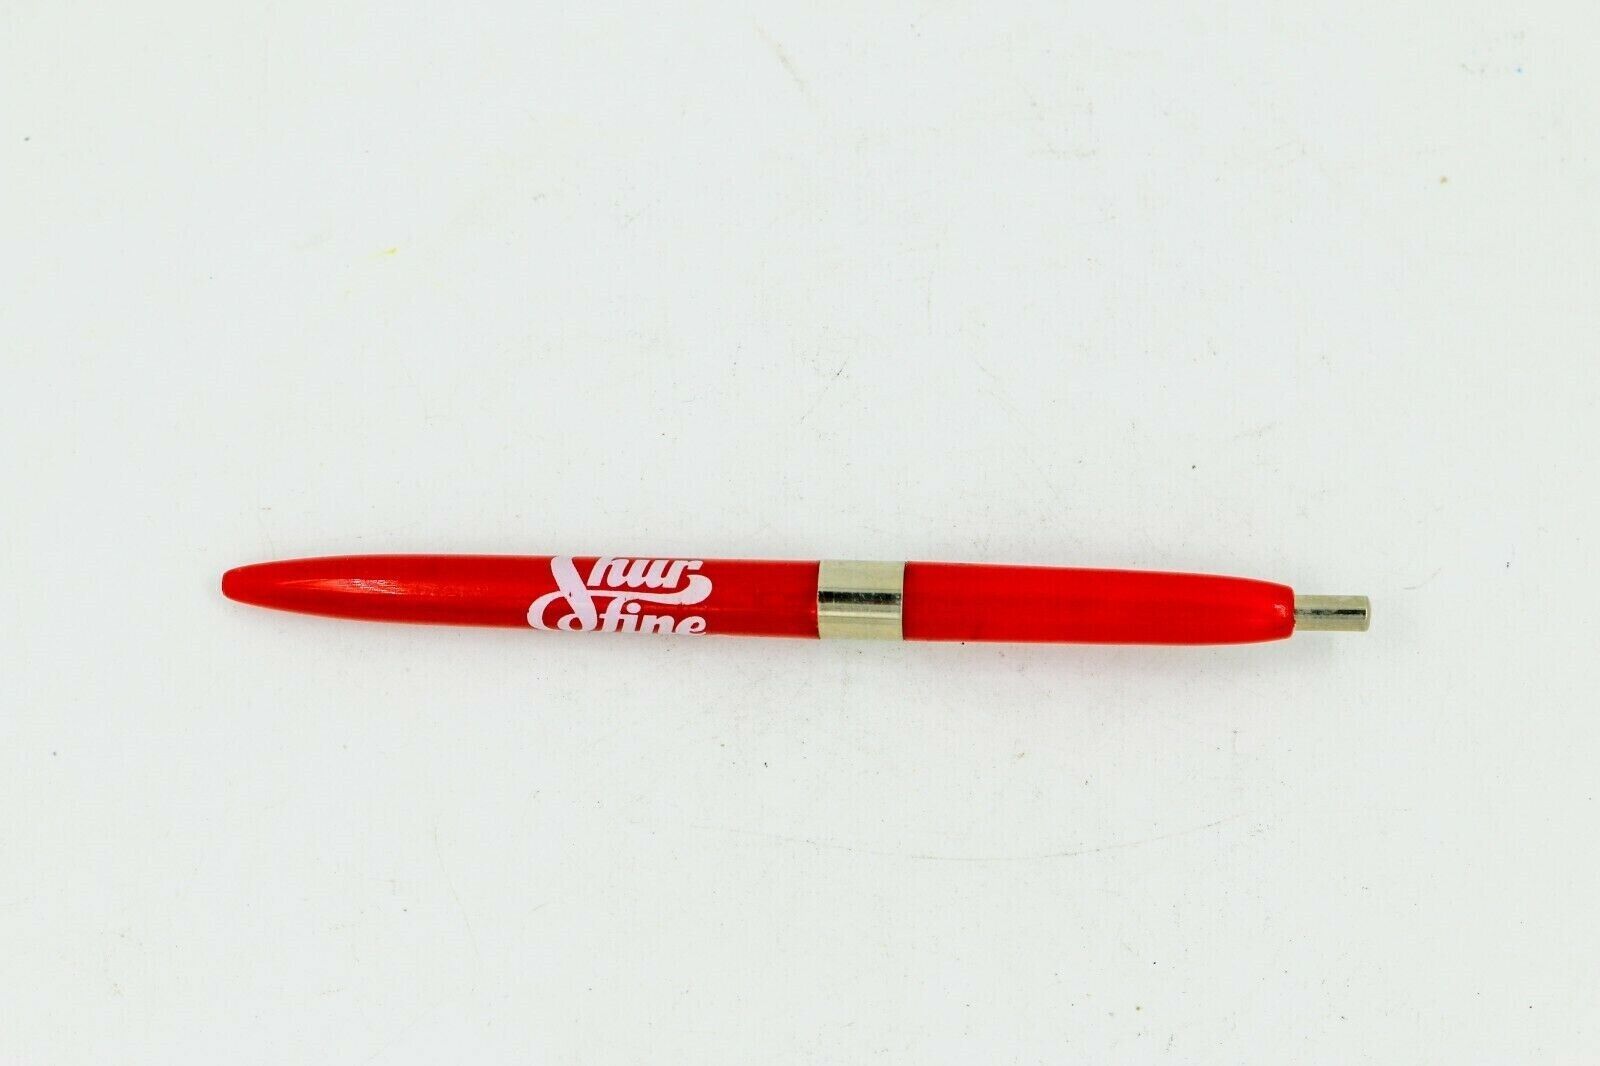 Shur Fine (Food) Vintage Advertising Pen